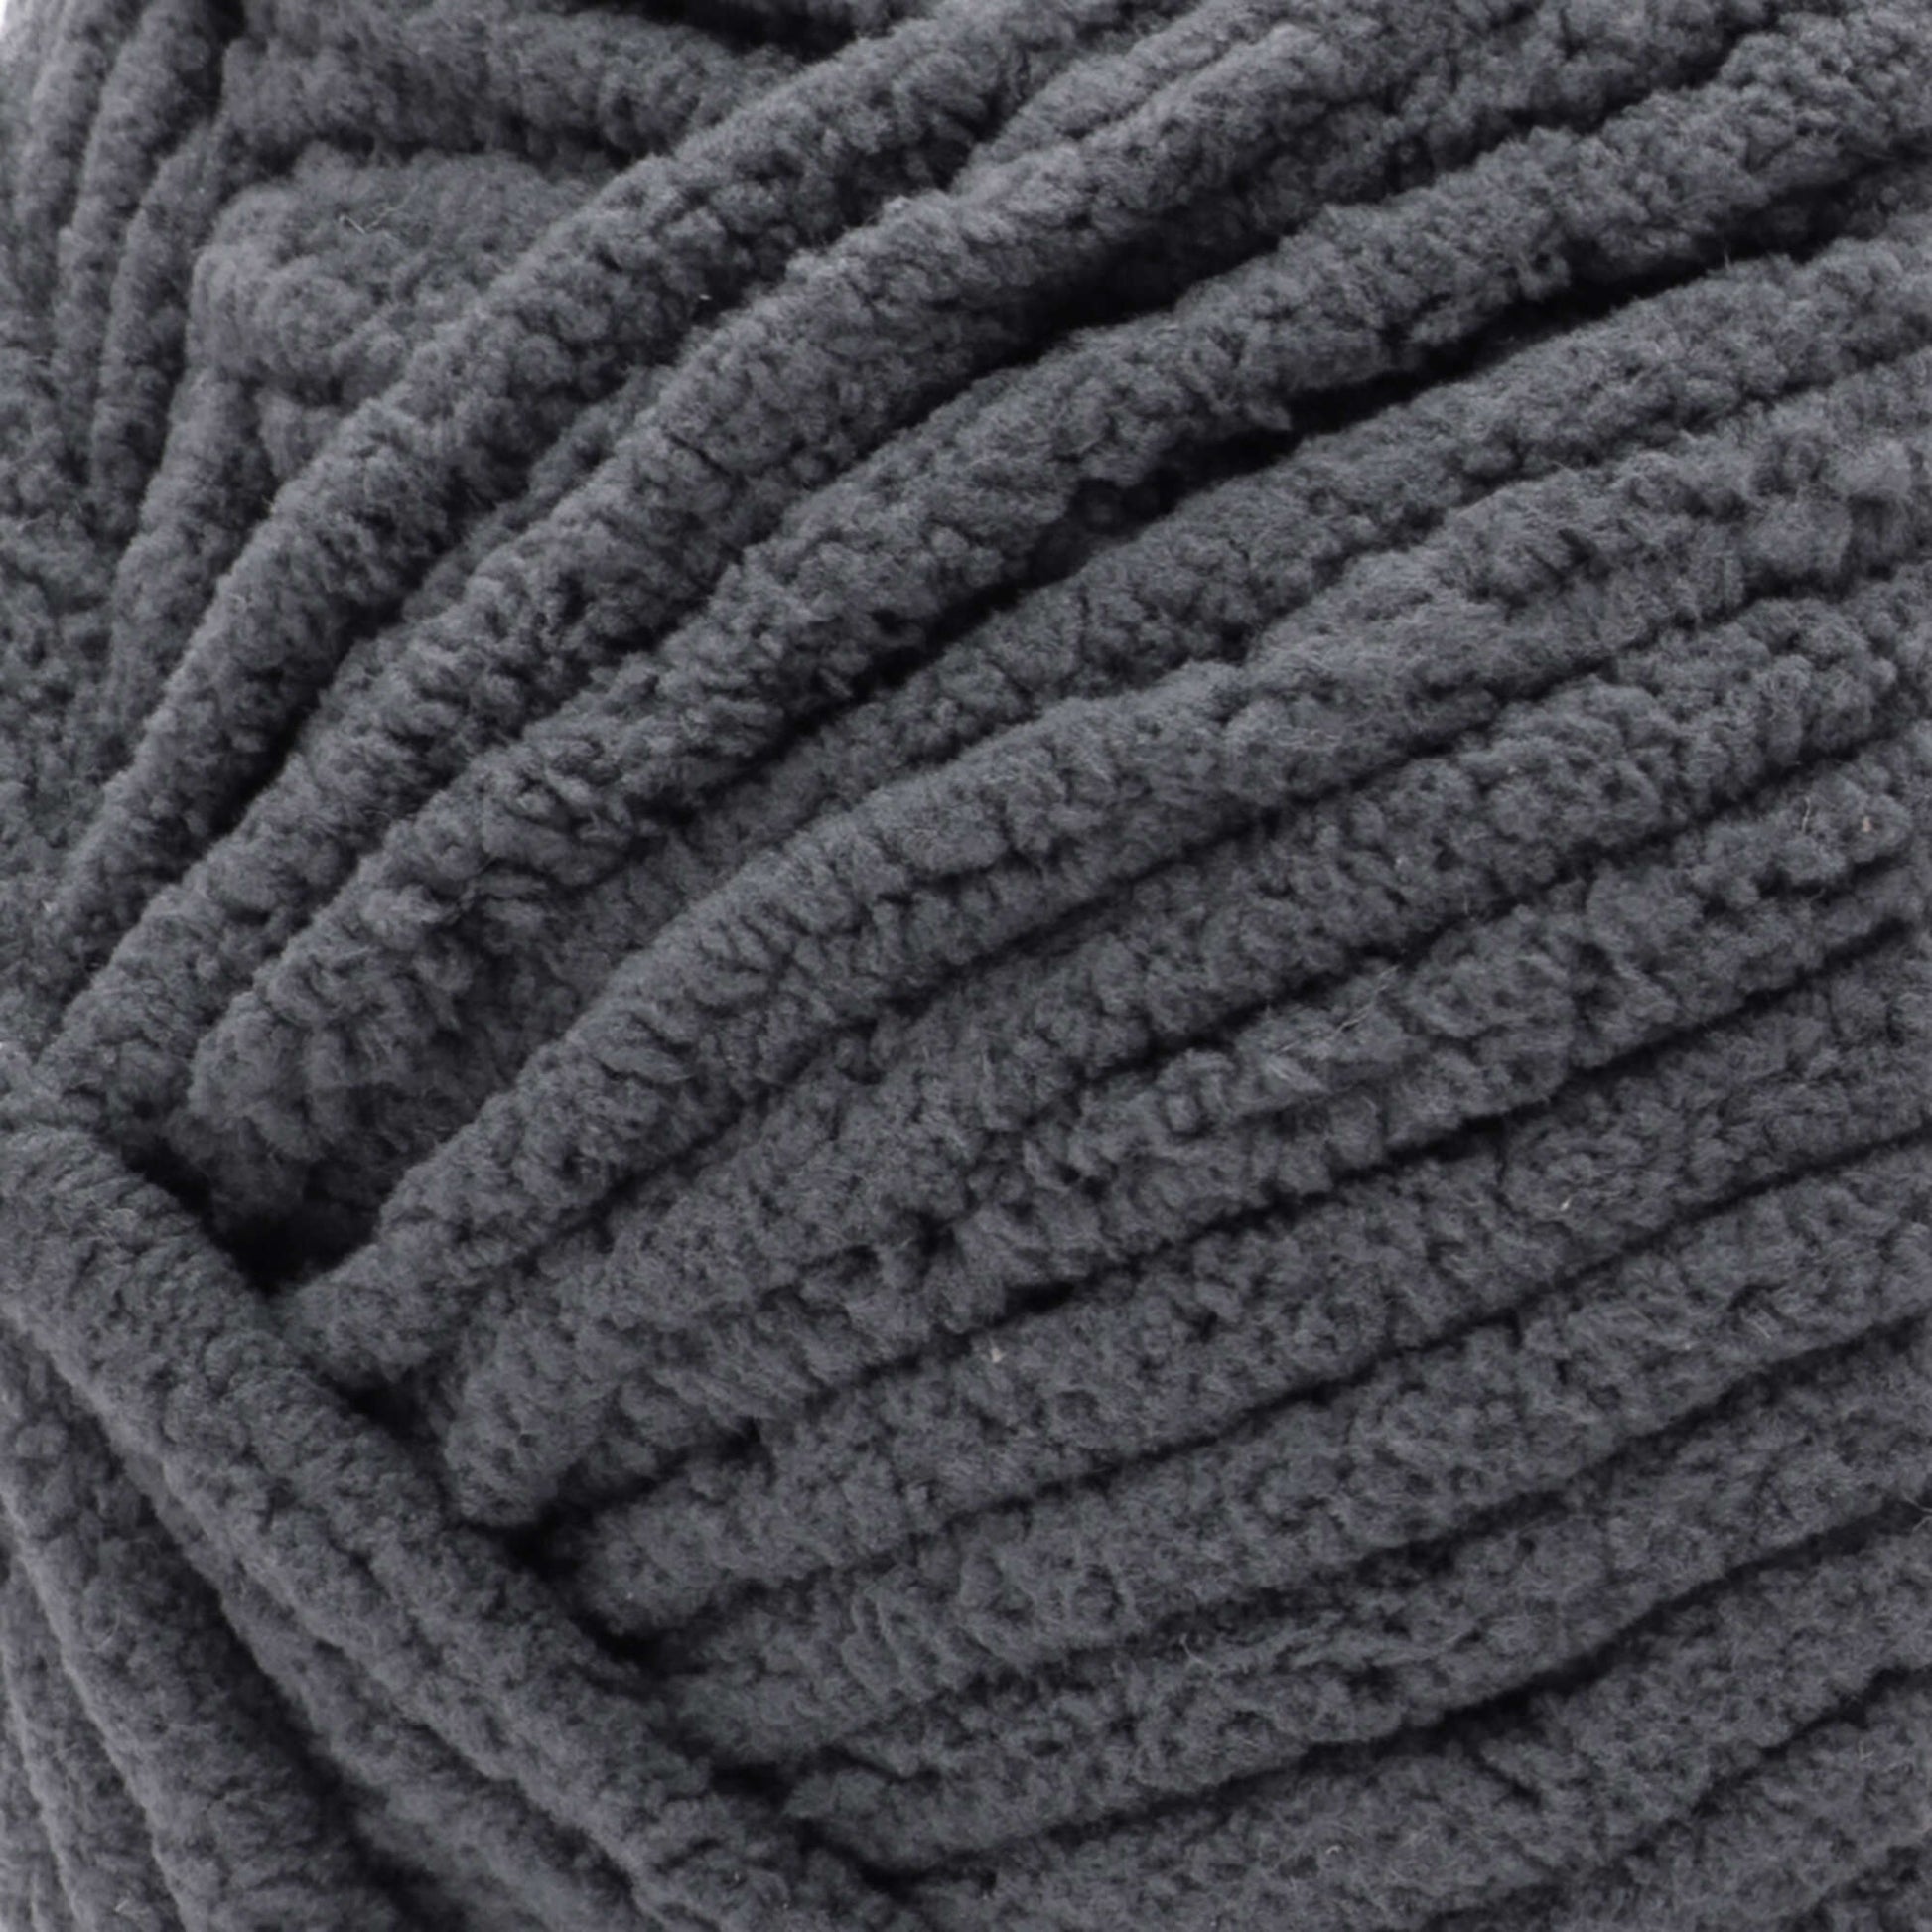 Bernat Blanket Yarn (300g/10.5oz)